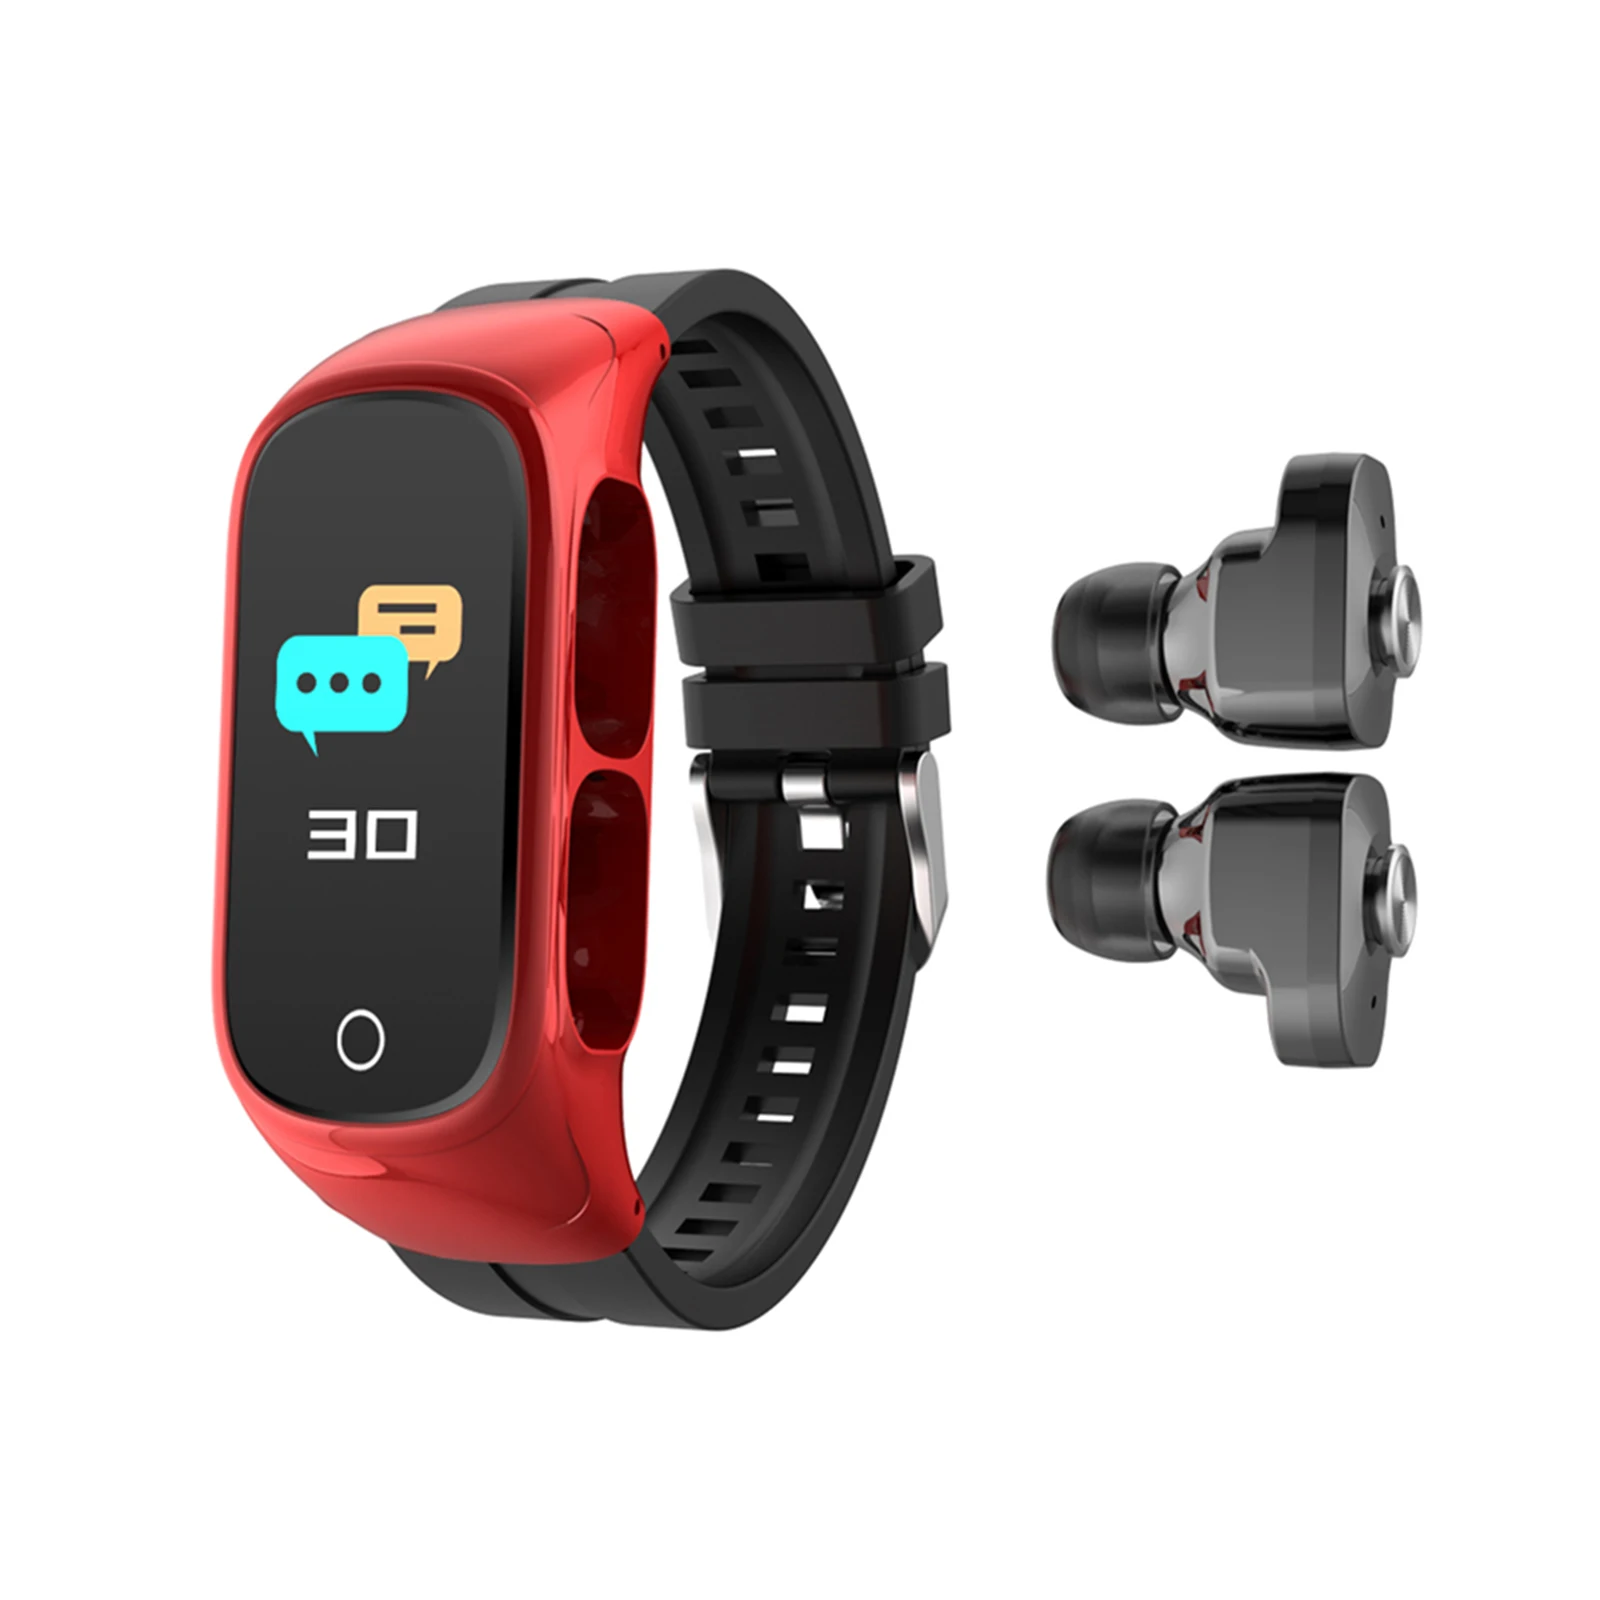 Wristbands 2In1 Smart Watch N8 TWS Earbuds Wireless BT5.0 Headphones Heart Rate Blood Pressure Sleep Monitor Smart Band Fitness Tracker